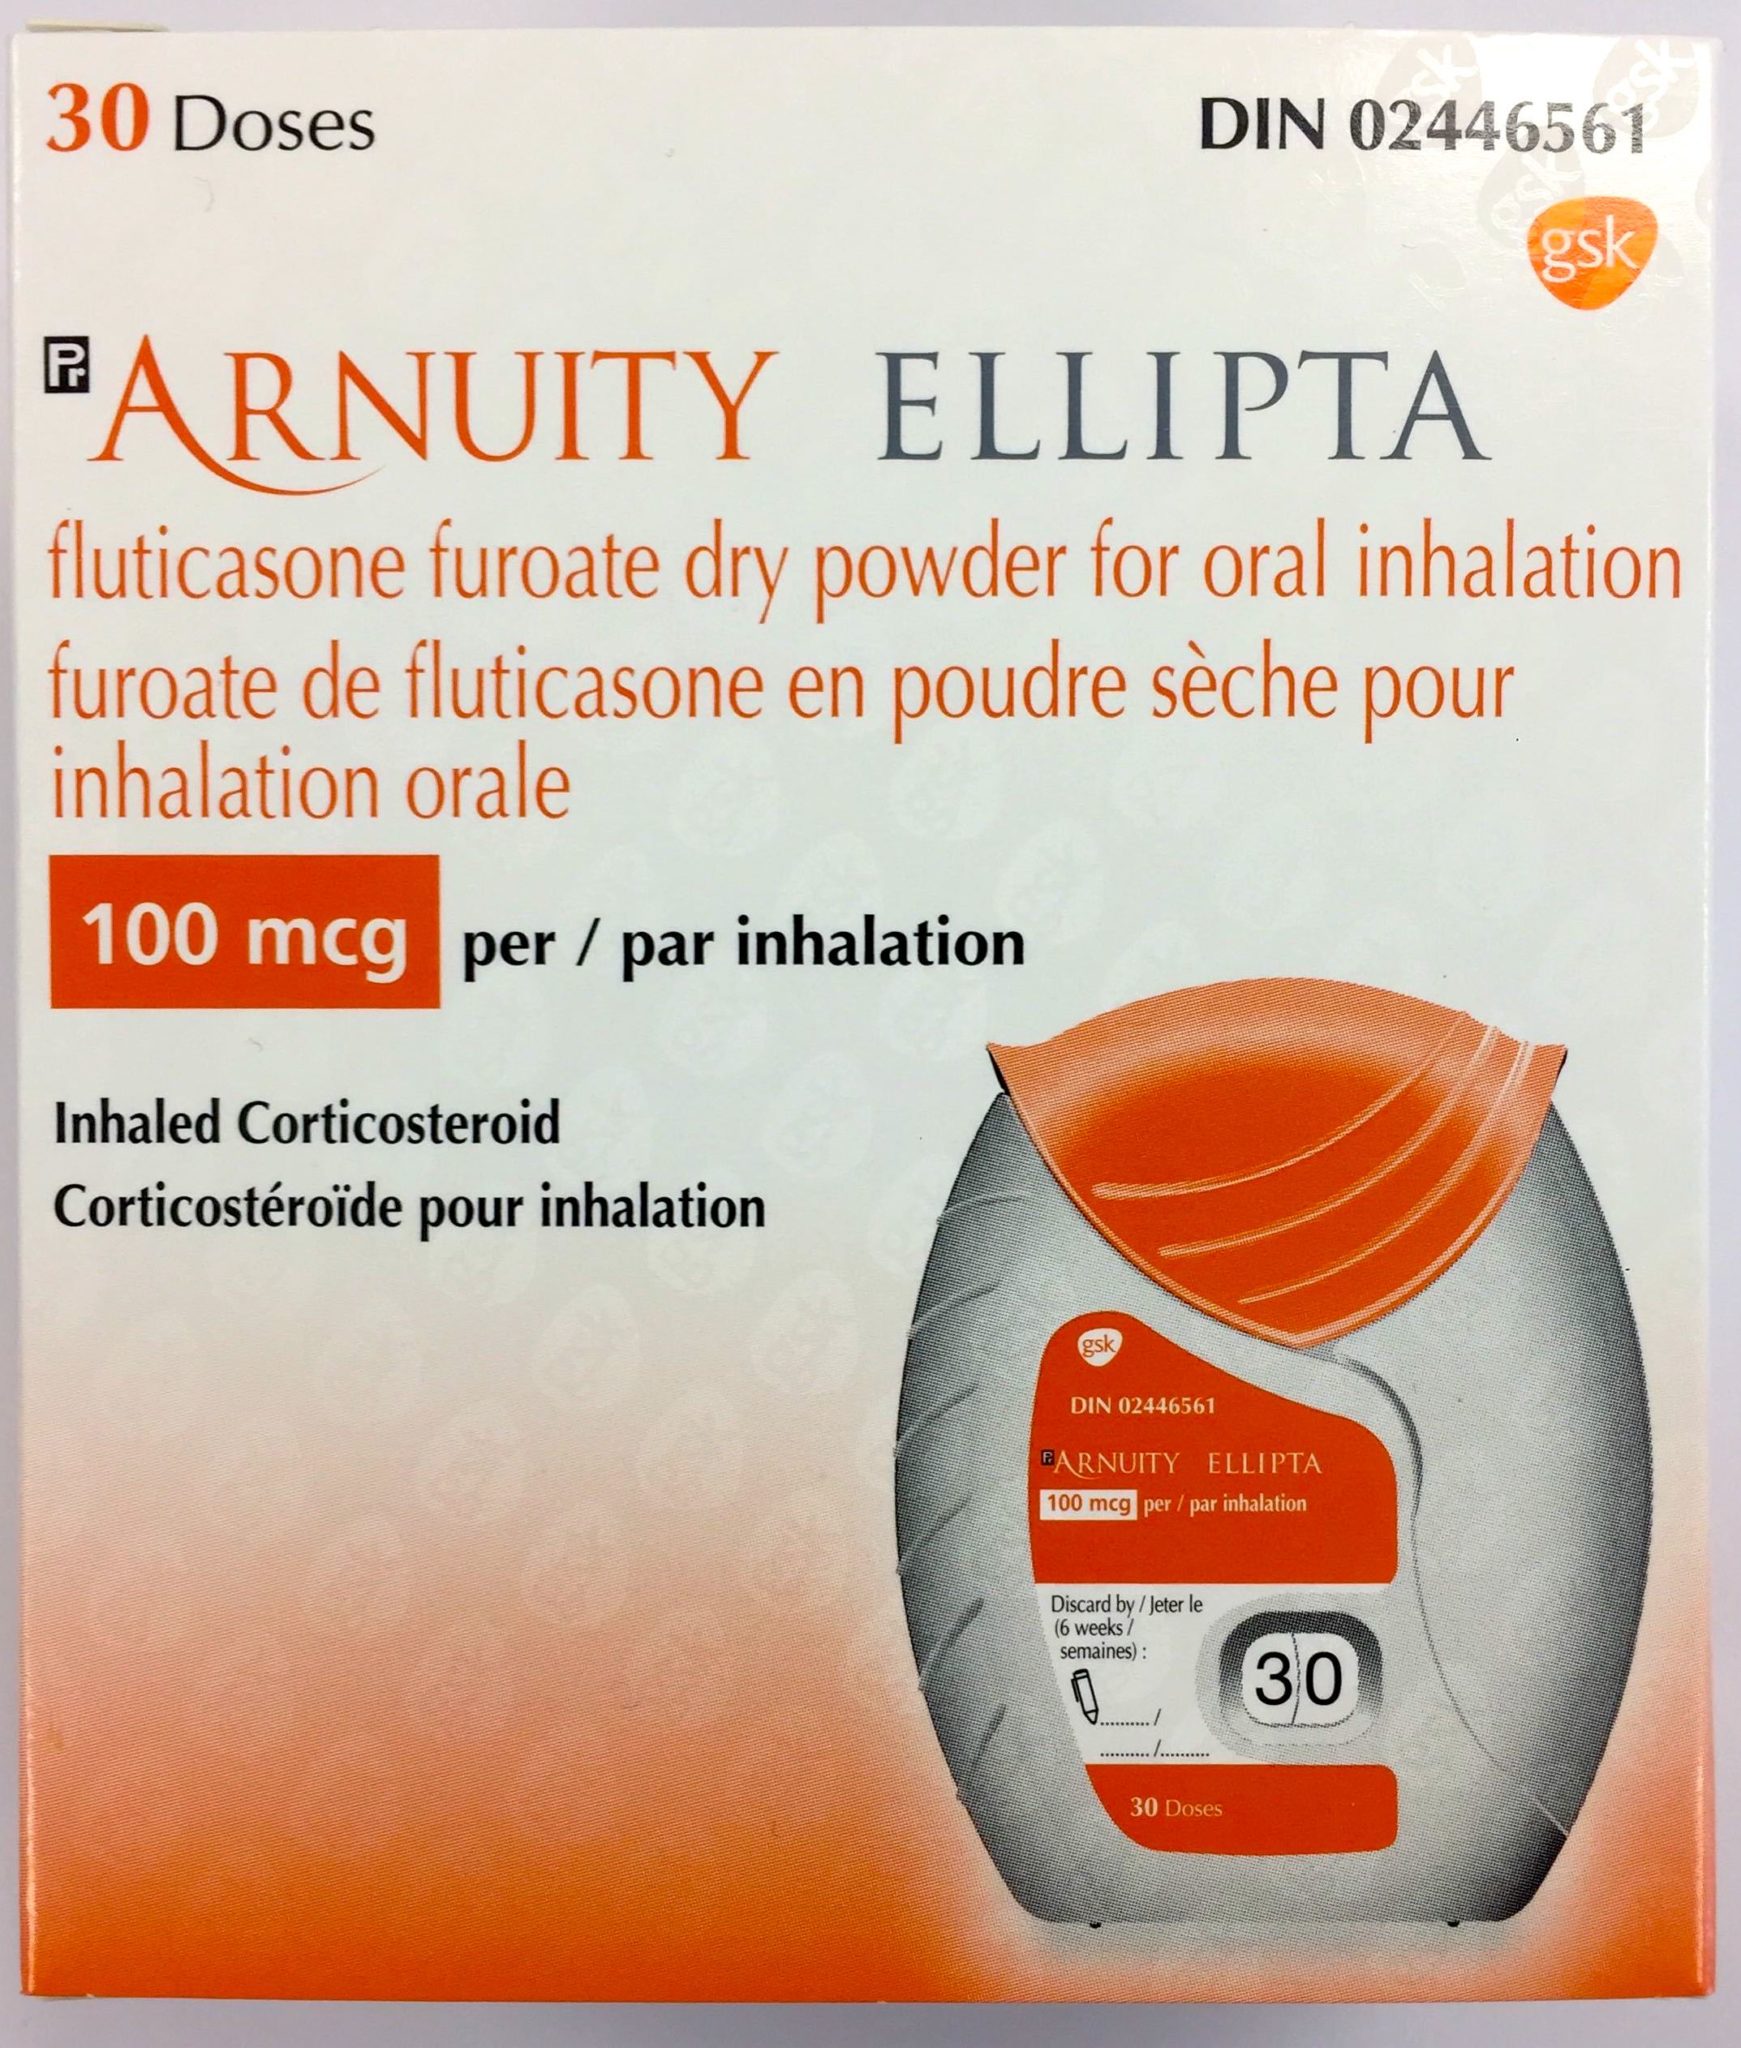 arnuity-ellipta-cost-coupon-discounts-pricepro-pharmacy